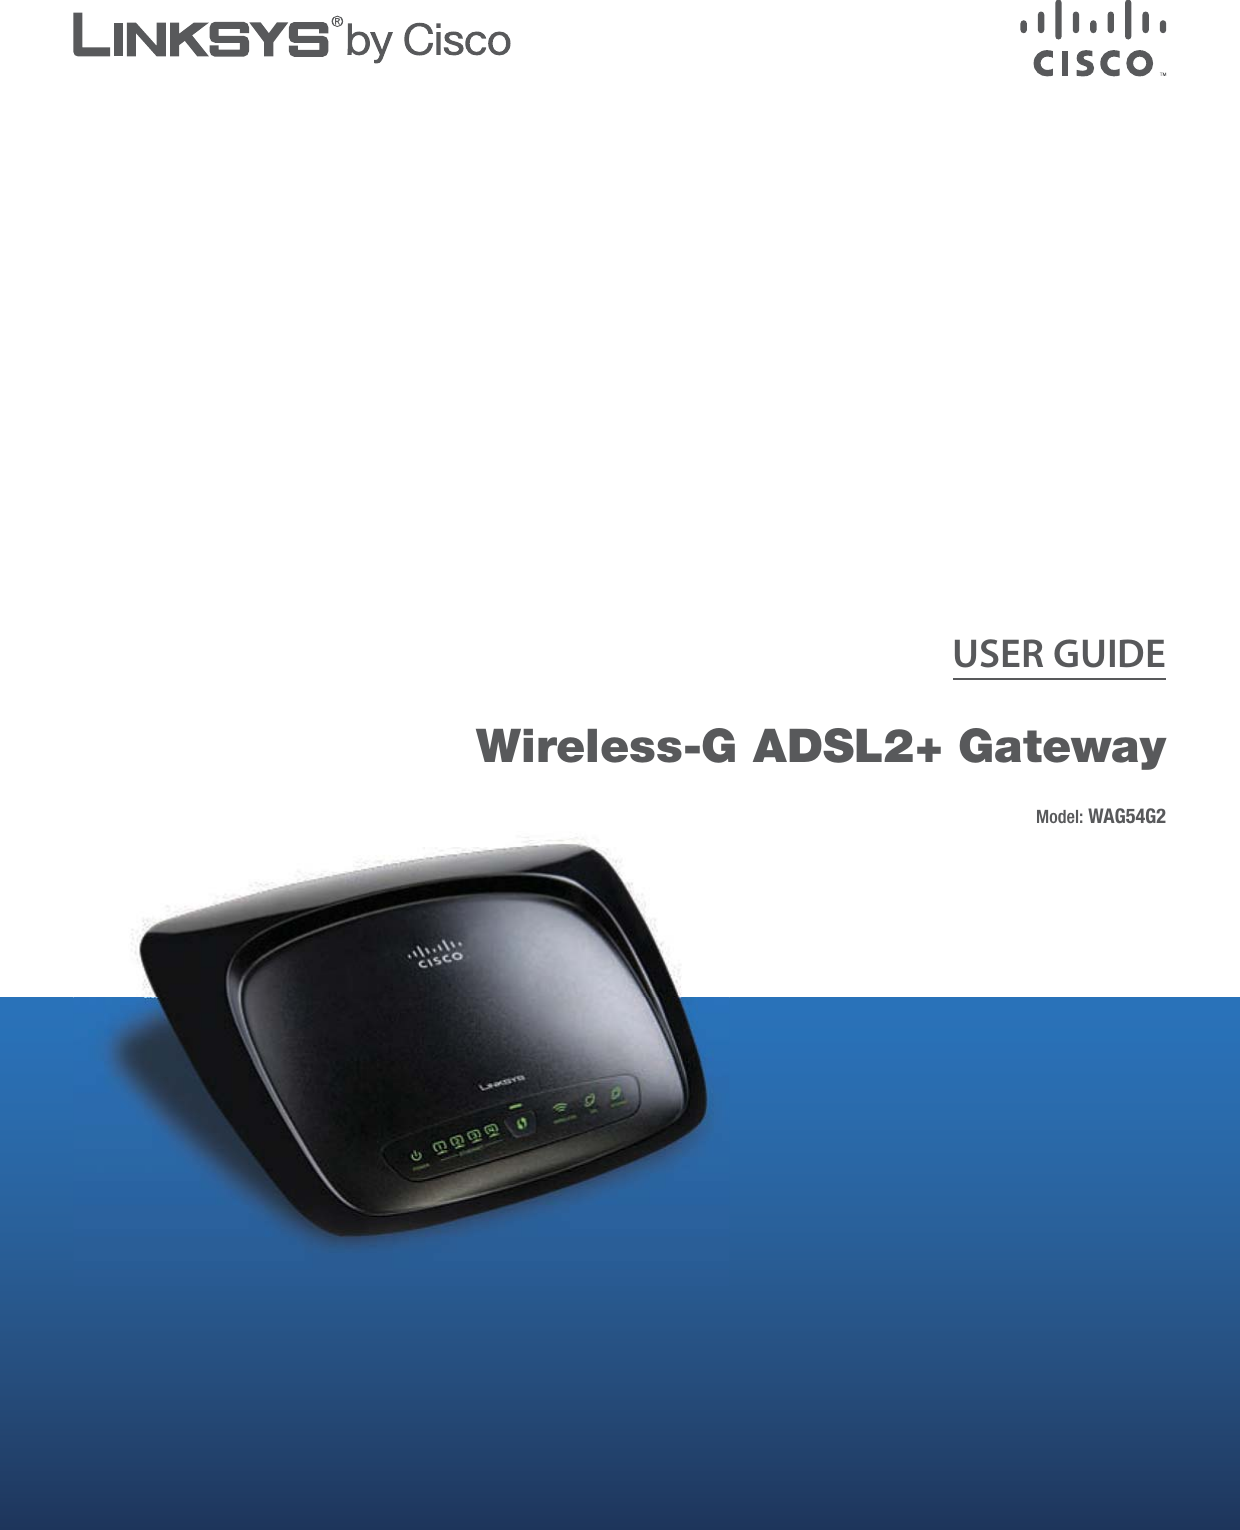 USER GUIDEWireless-G ADSL2+ GatewayModel: WAG54G2